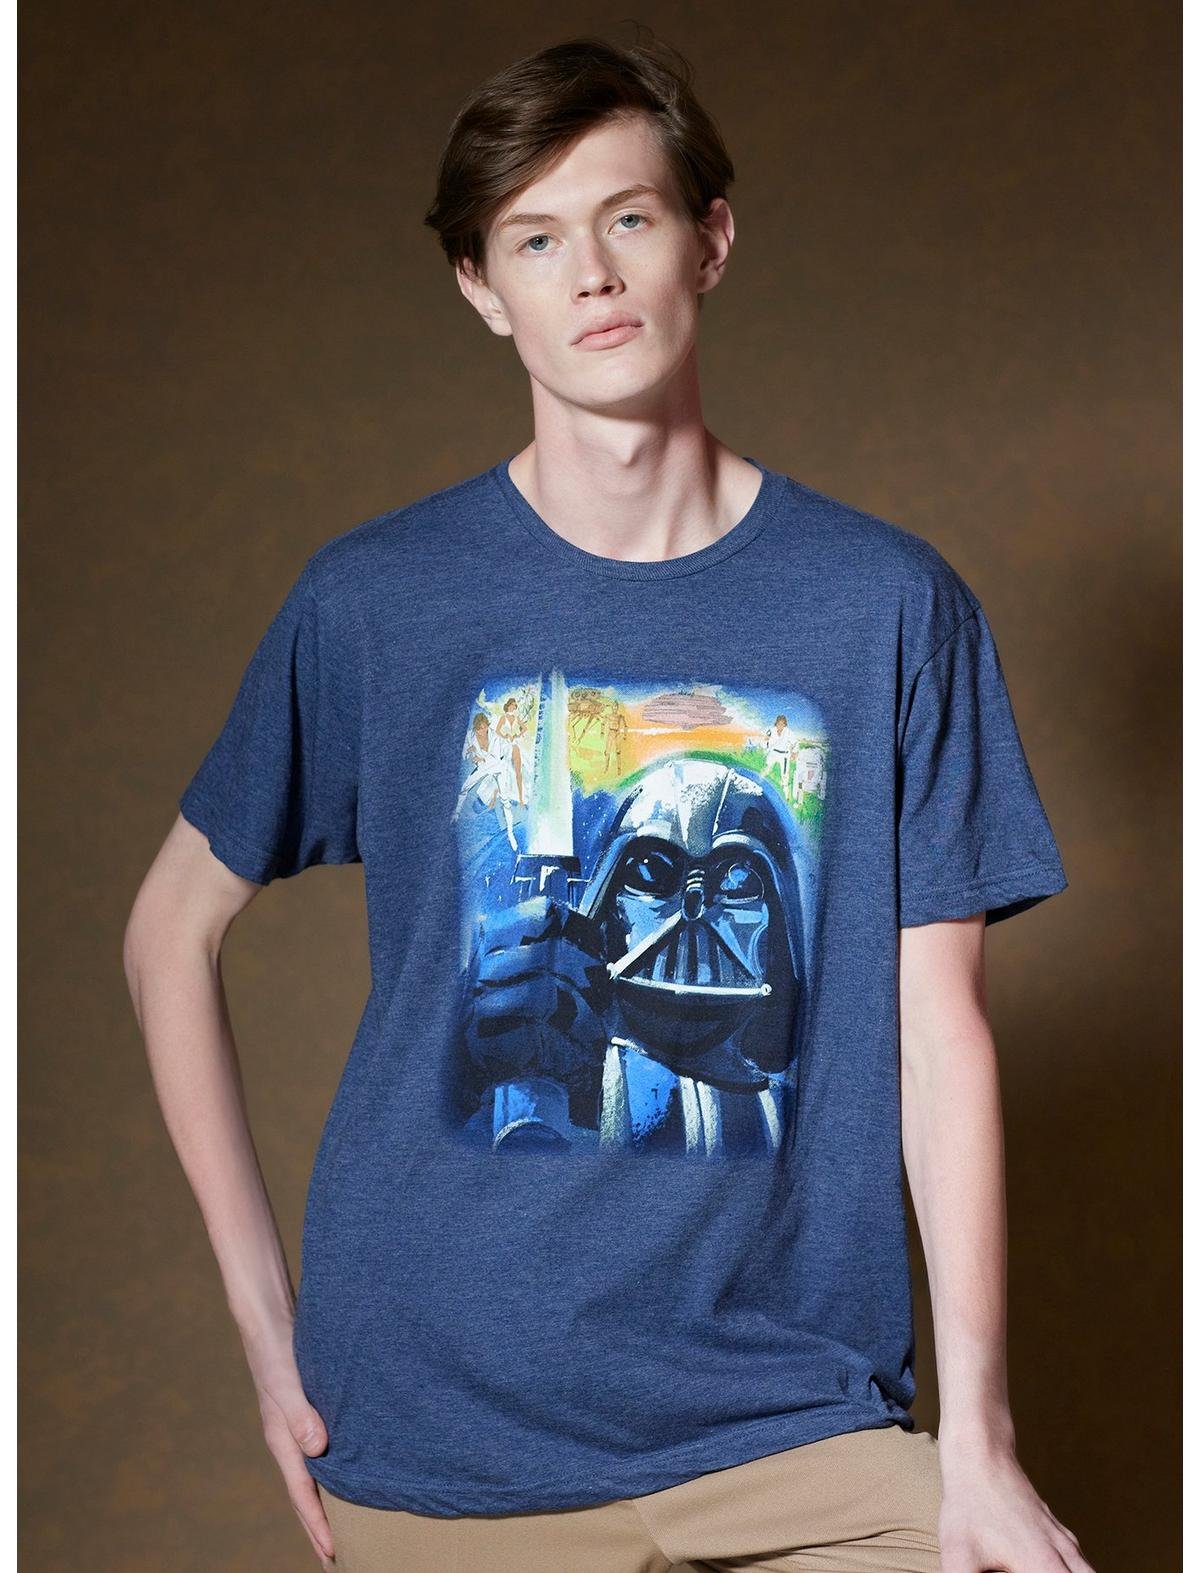 Our Universe Star Wars Darth Vader Character Sketch T-Shirt